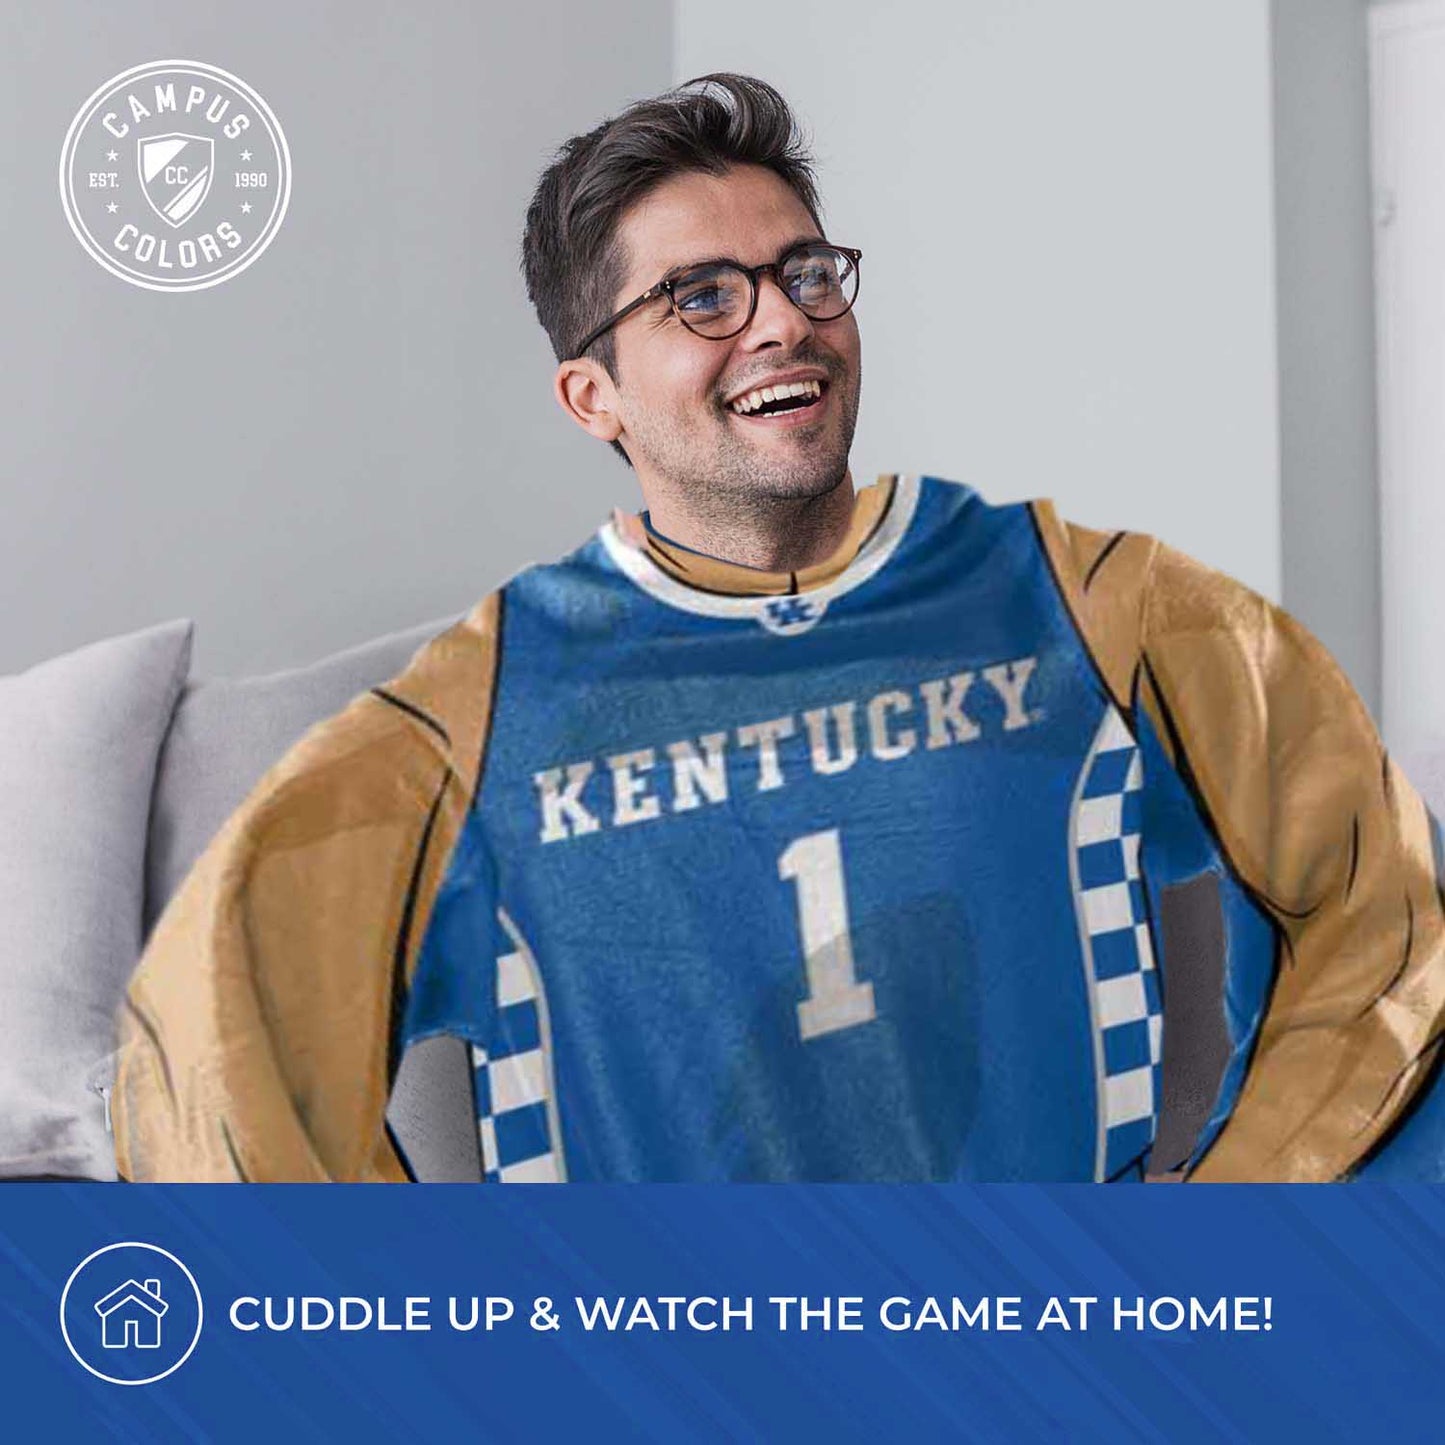 Kentucky Wildcats NCAA Team Wearable Blanket with Sleeves - Blue